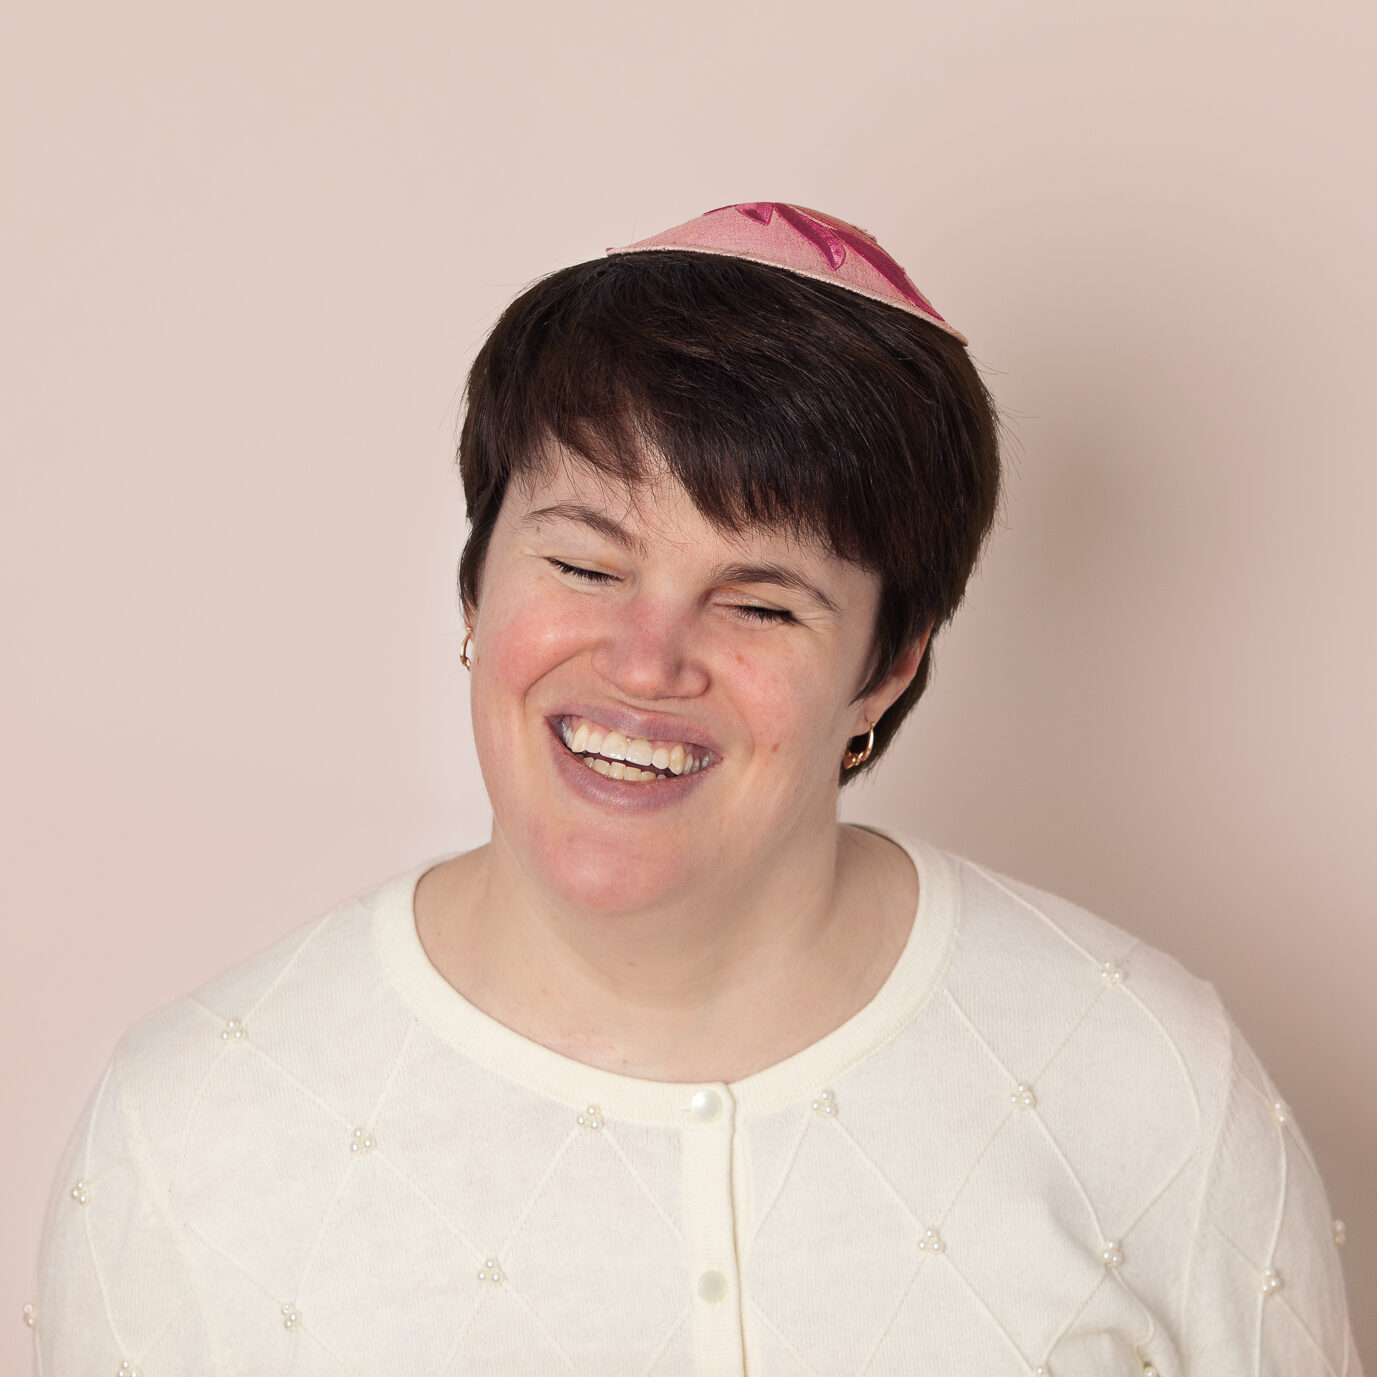 Rabbi Lauren Tuchman